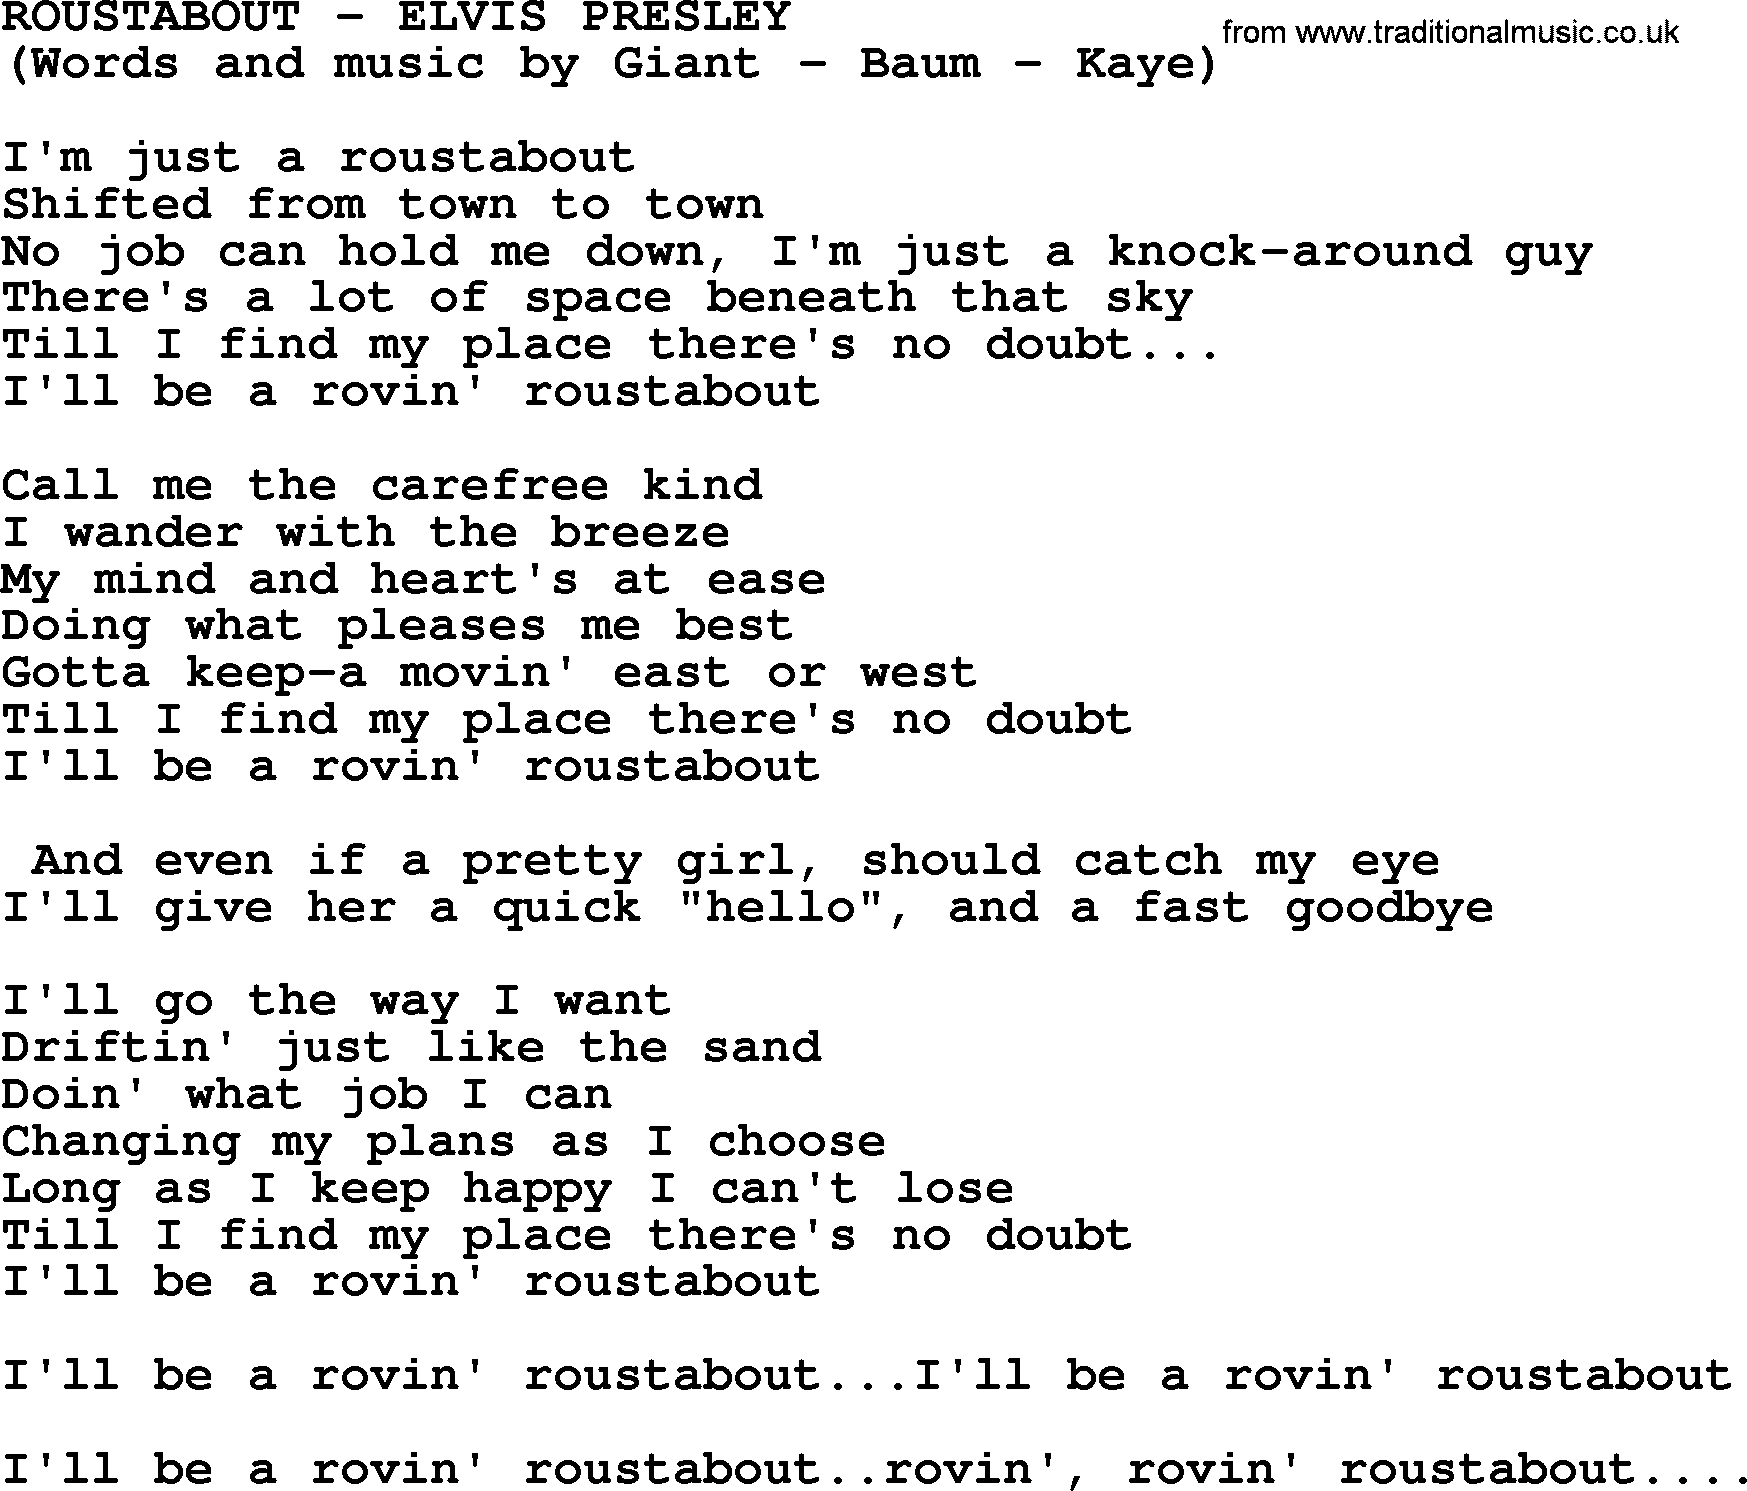 Elvis Presley song: Roustabout lyrics